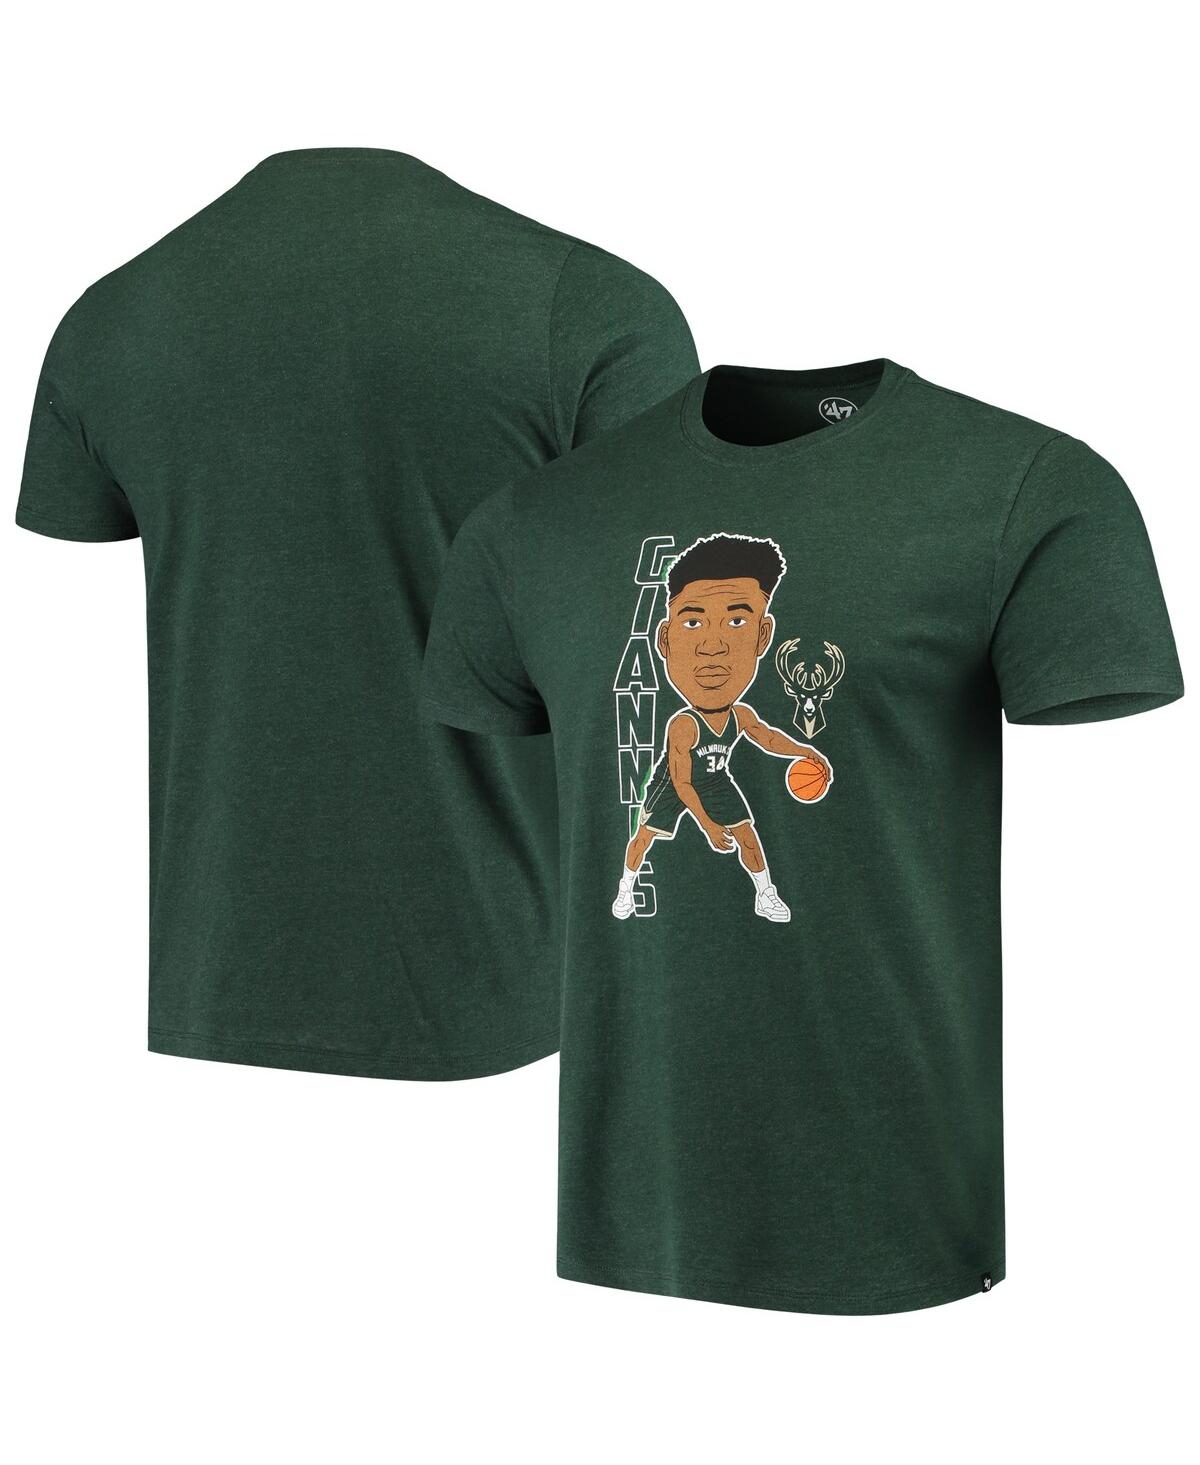 Men's '47 Brand Giannis Antetokounmpo Heathered Hunter Green Milwaukee Bucks Bobblehead T-shirt - Heathered Hunter Green